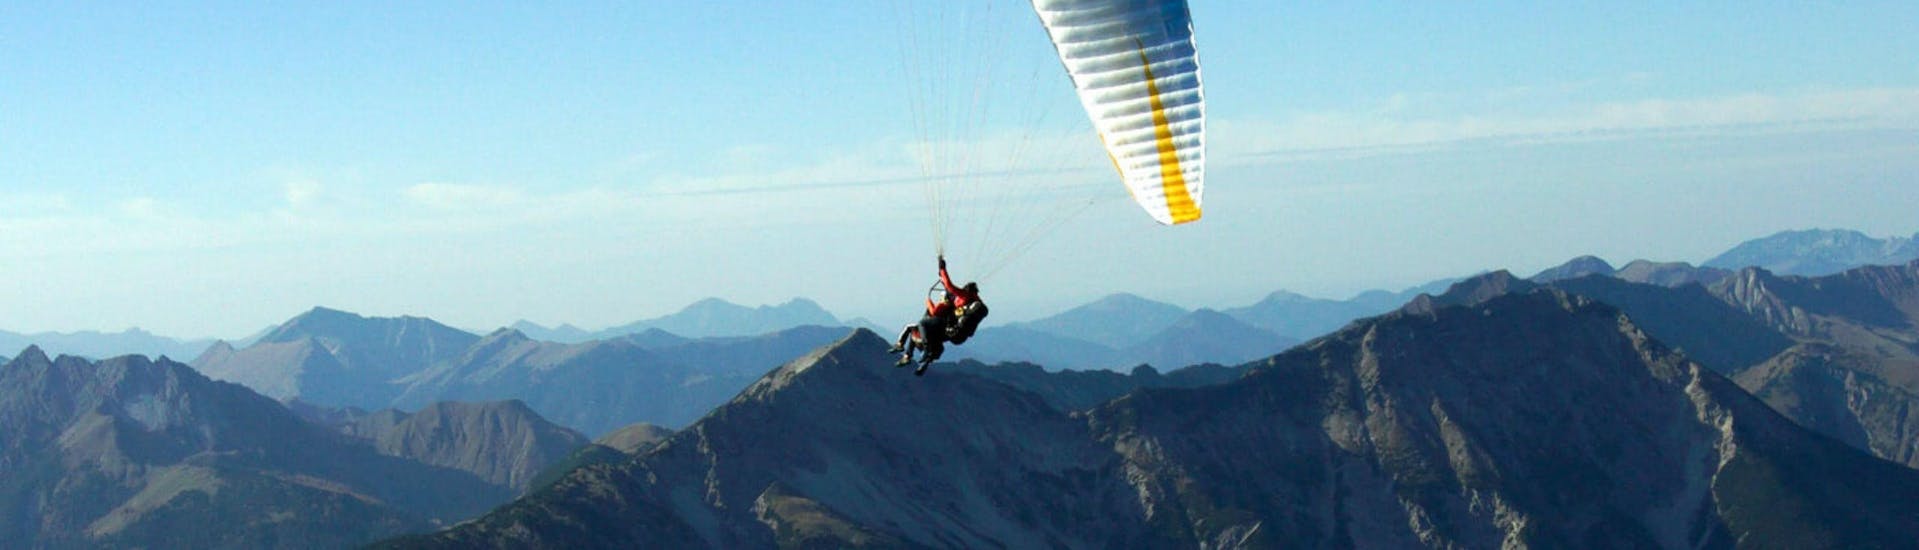 tandem-paragliding-thermal-tandem-achensee-hero